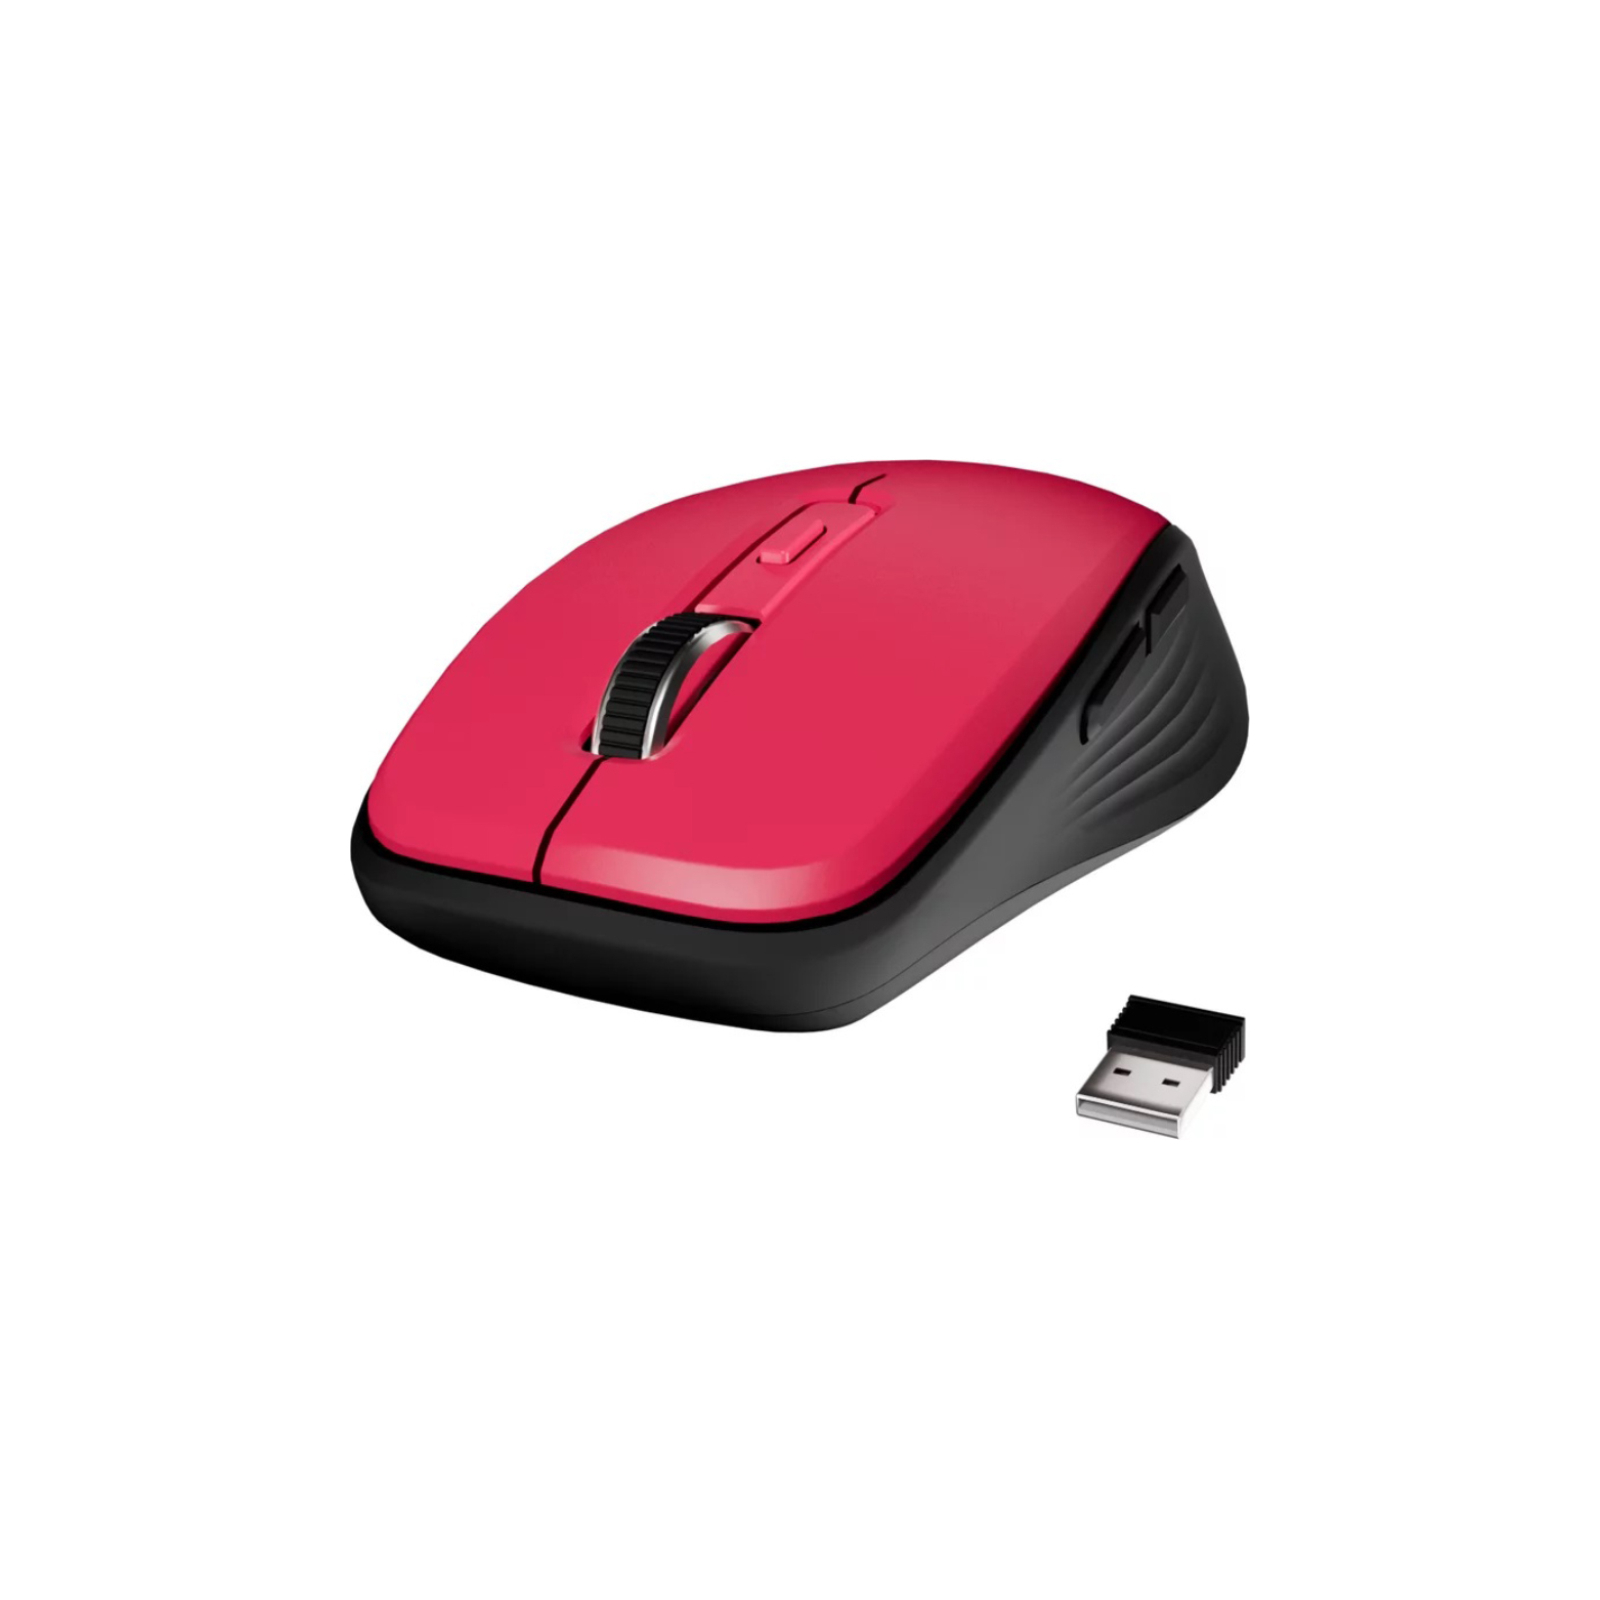 Мышка OfficePro M267R Silent Click Wireless Red (M267R) изображение 6